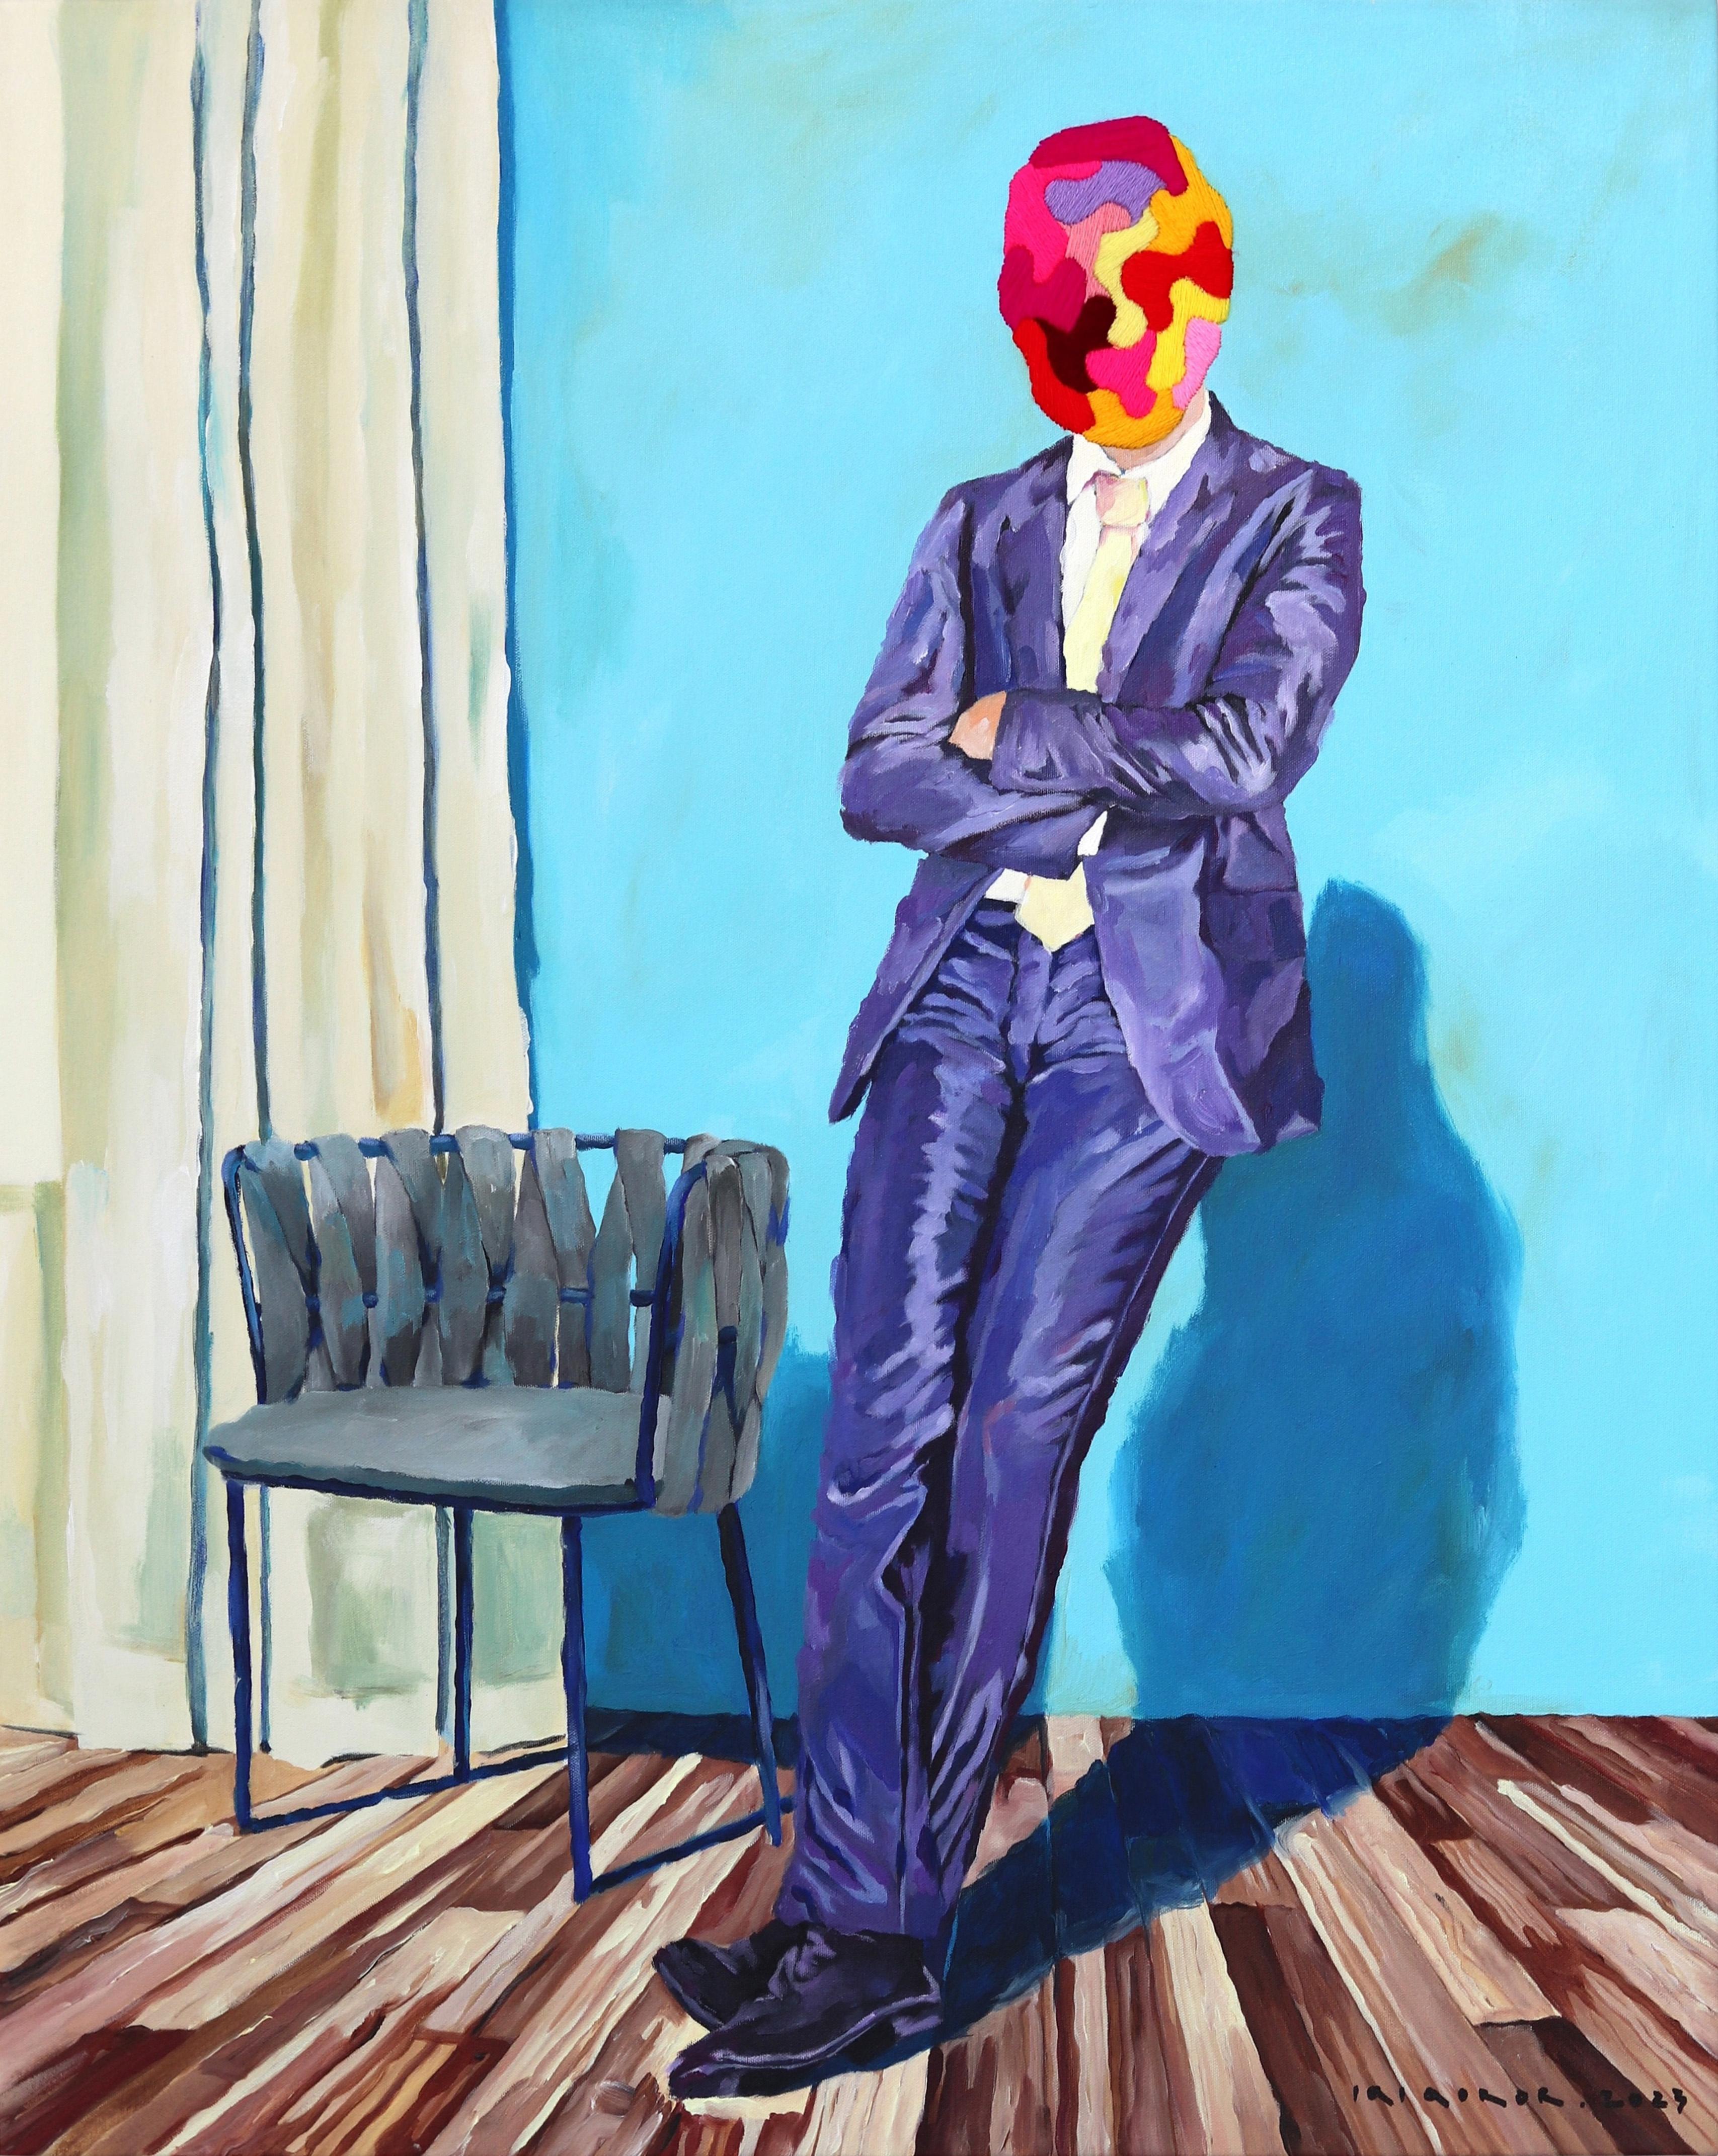 Iqi Qoror Portrait Painting - Confident Figure - Original Figurative Abstract Man in Purple Suit on Blue Wall